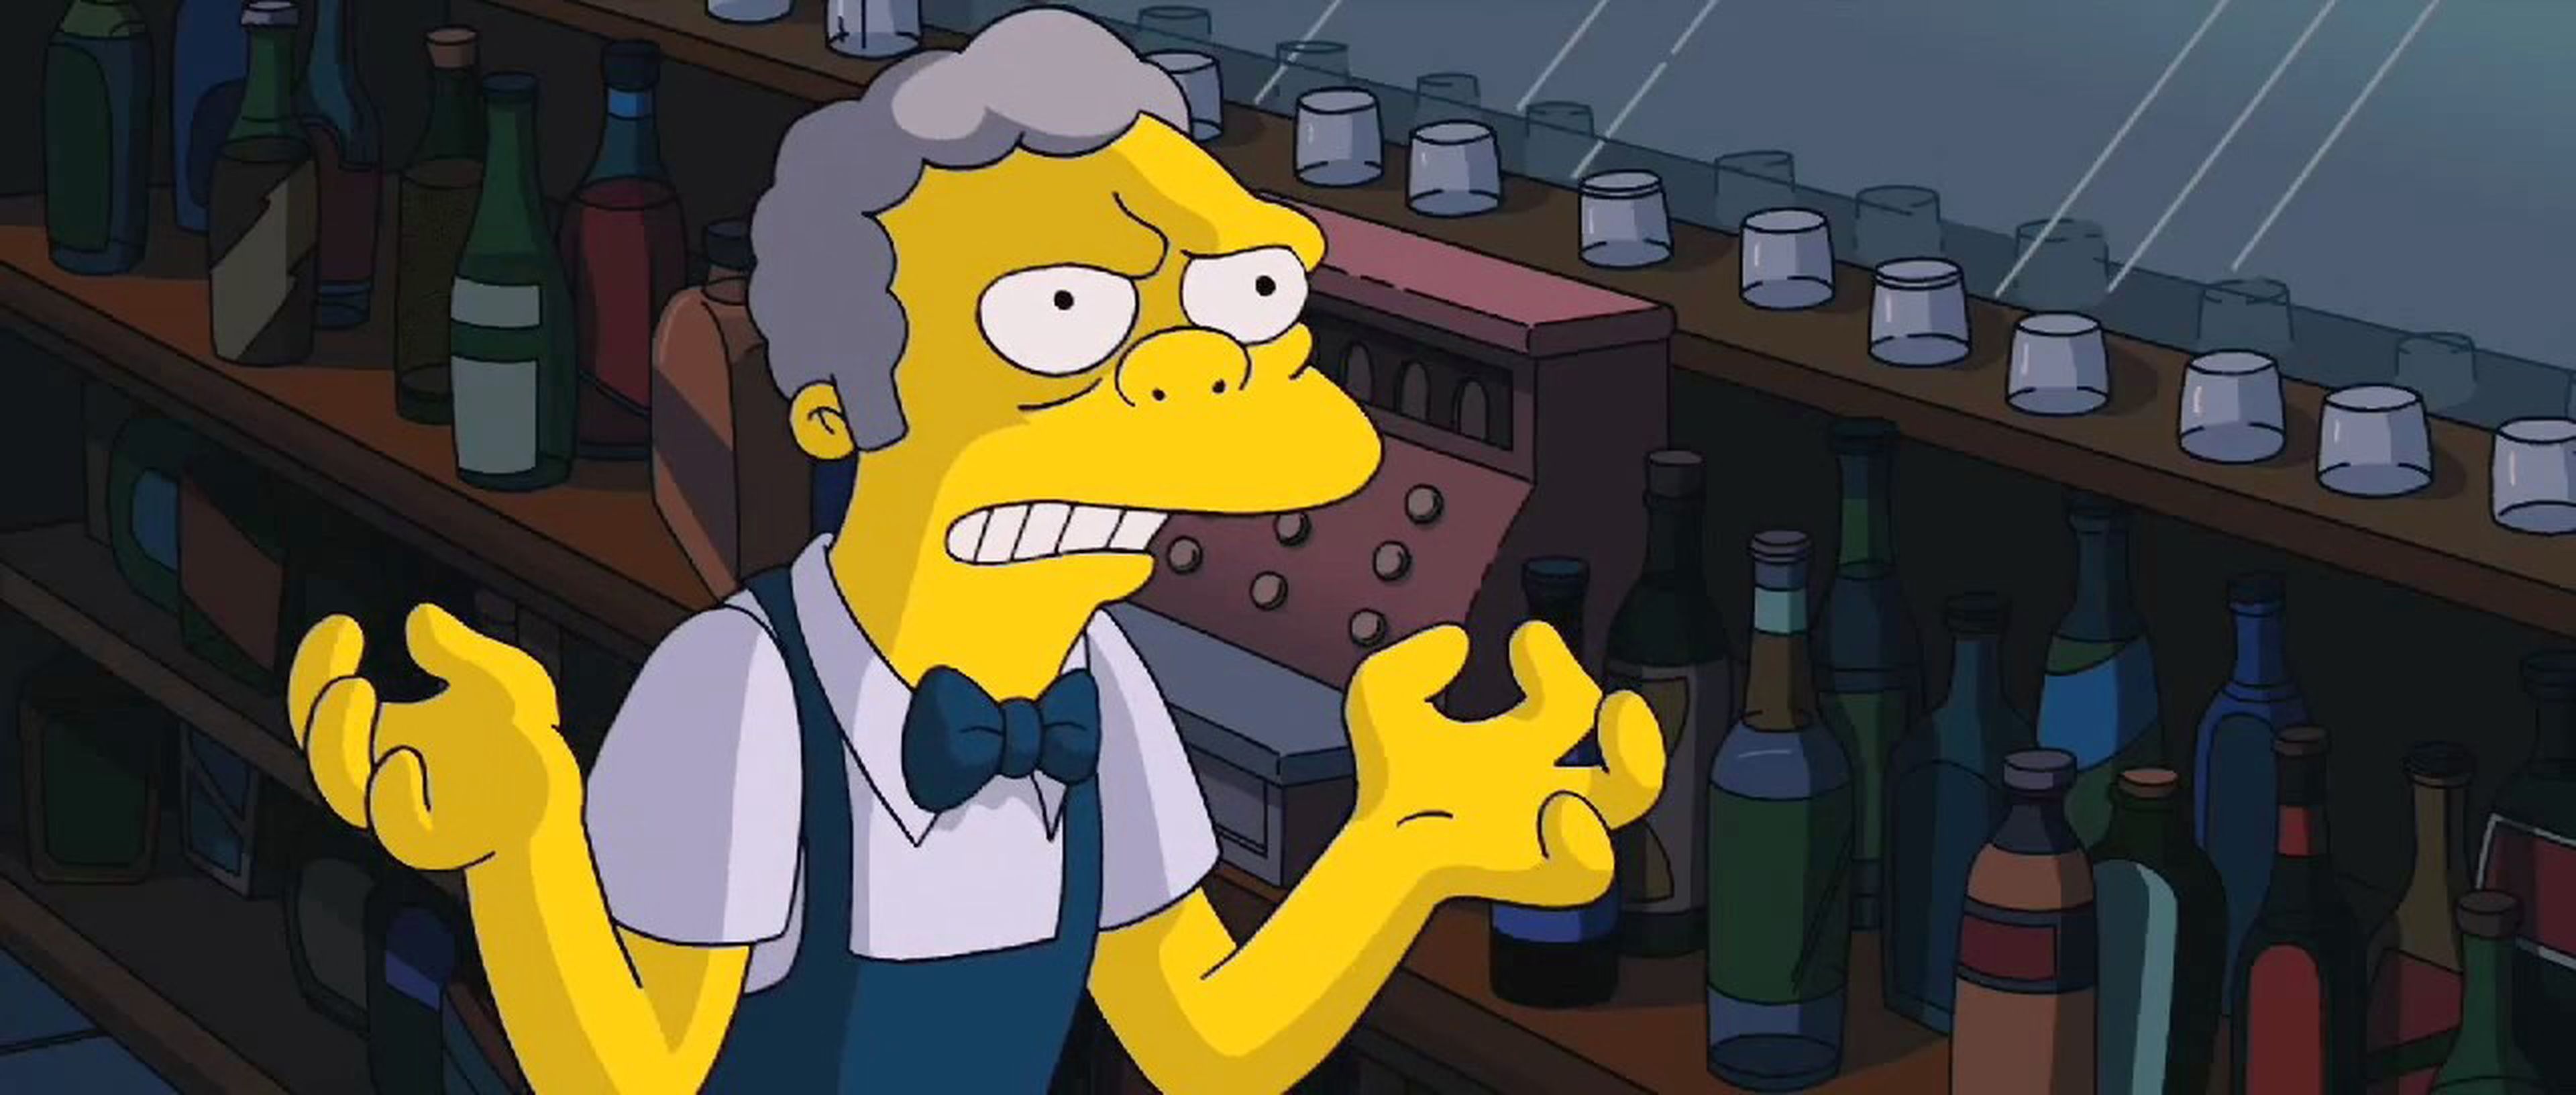 Moe Szyslak de Los Simpsons